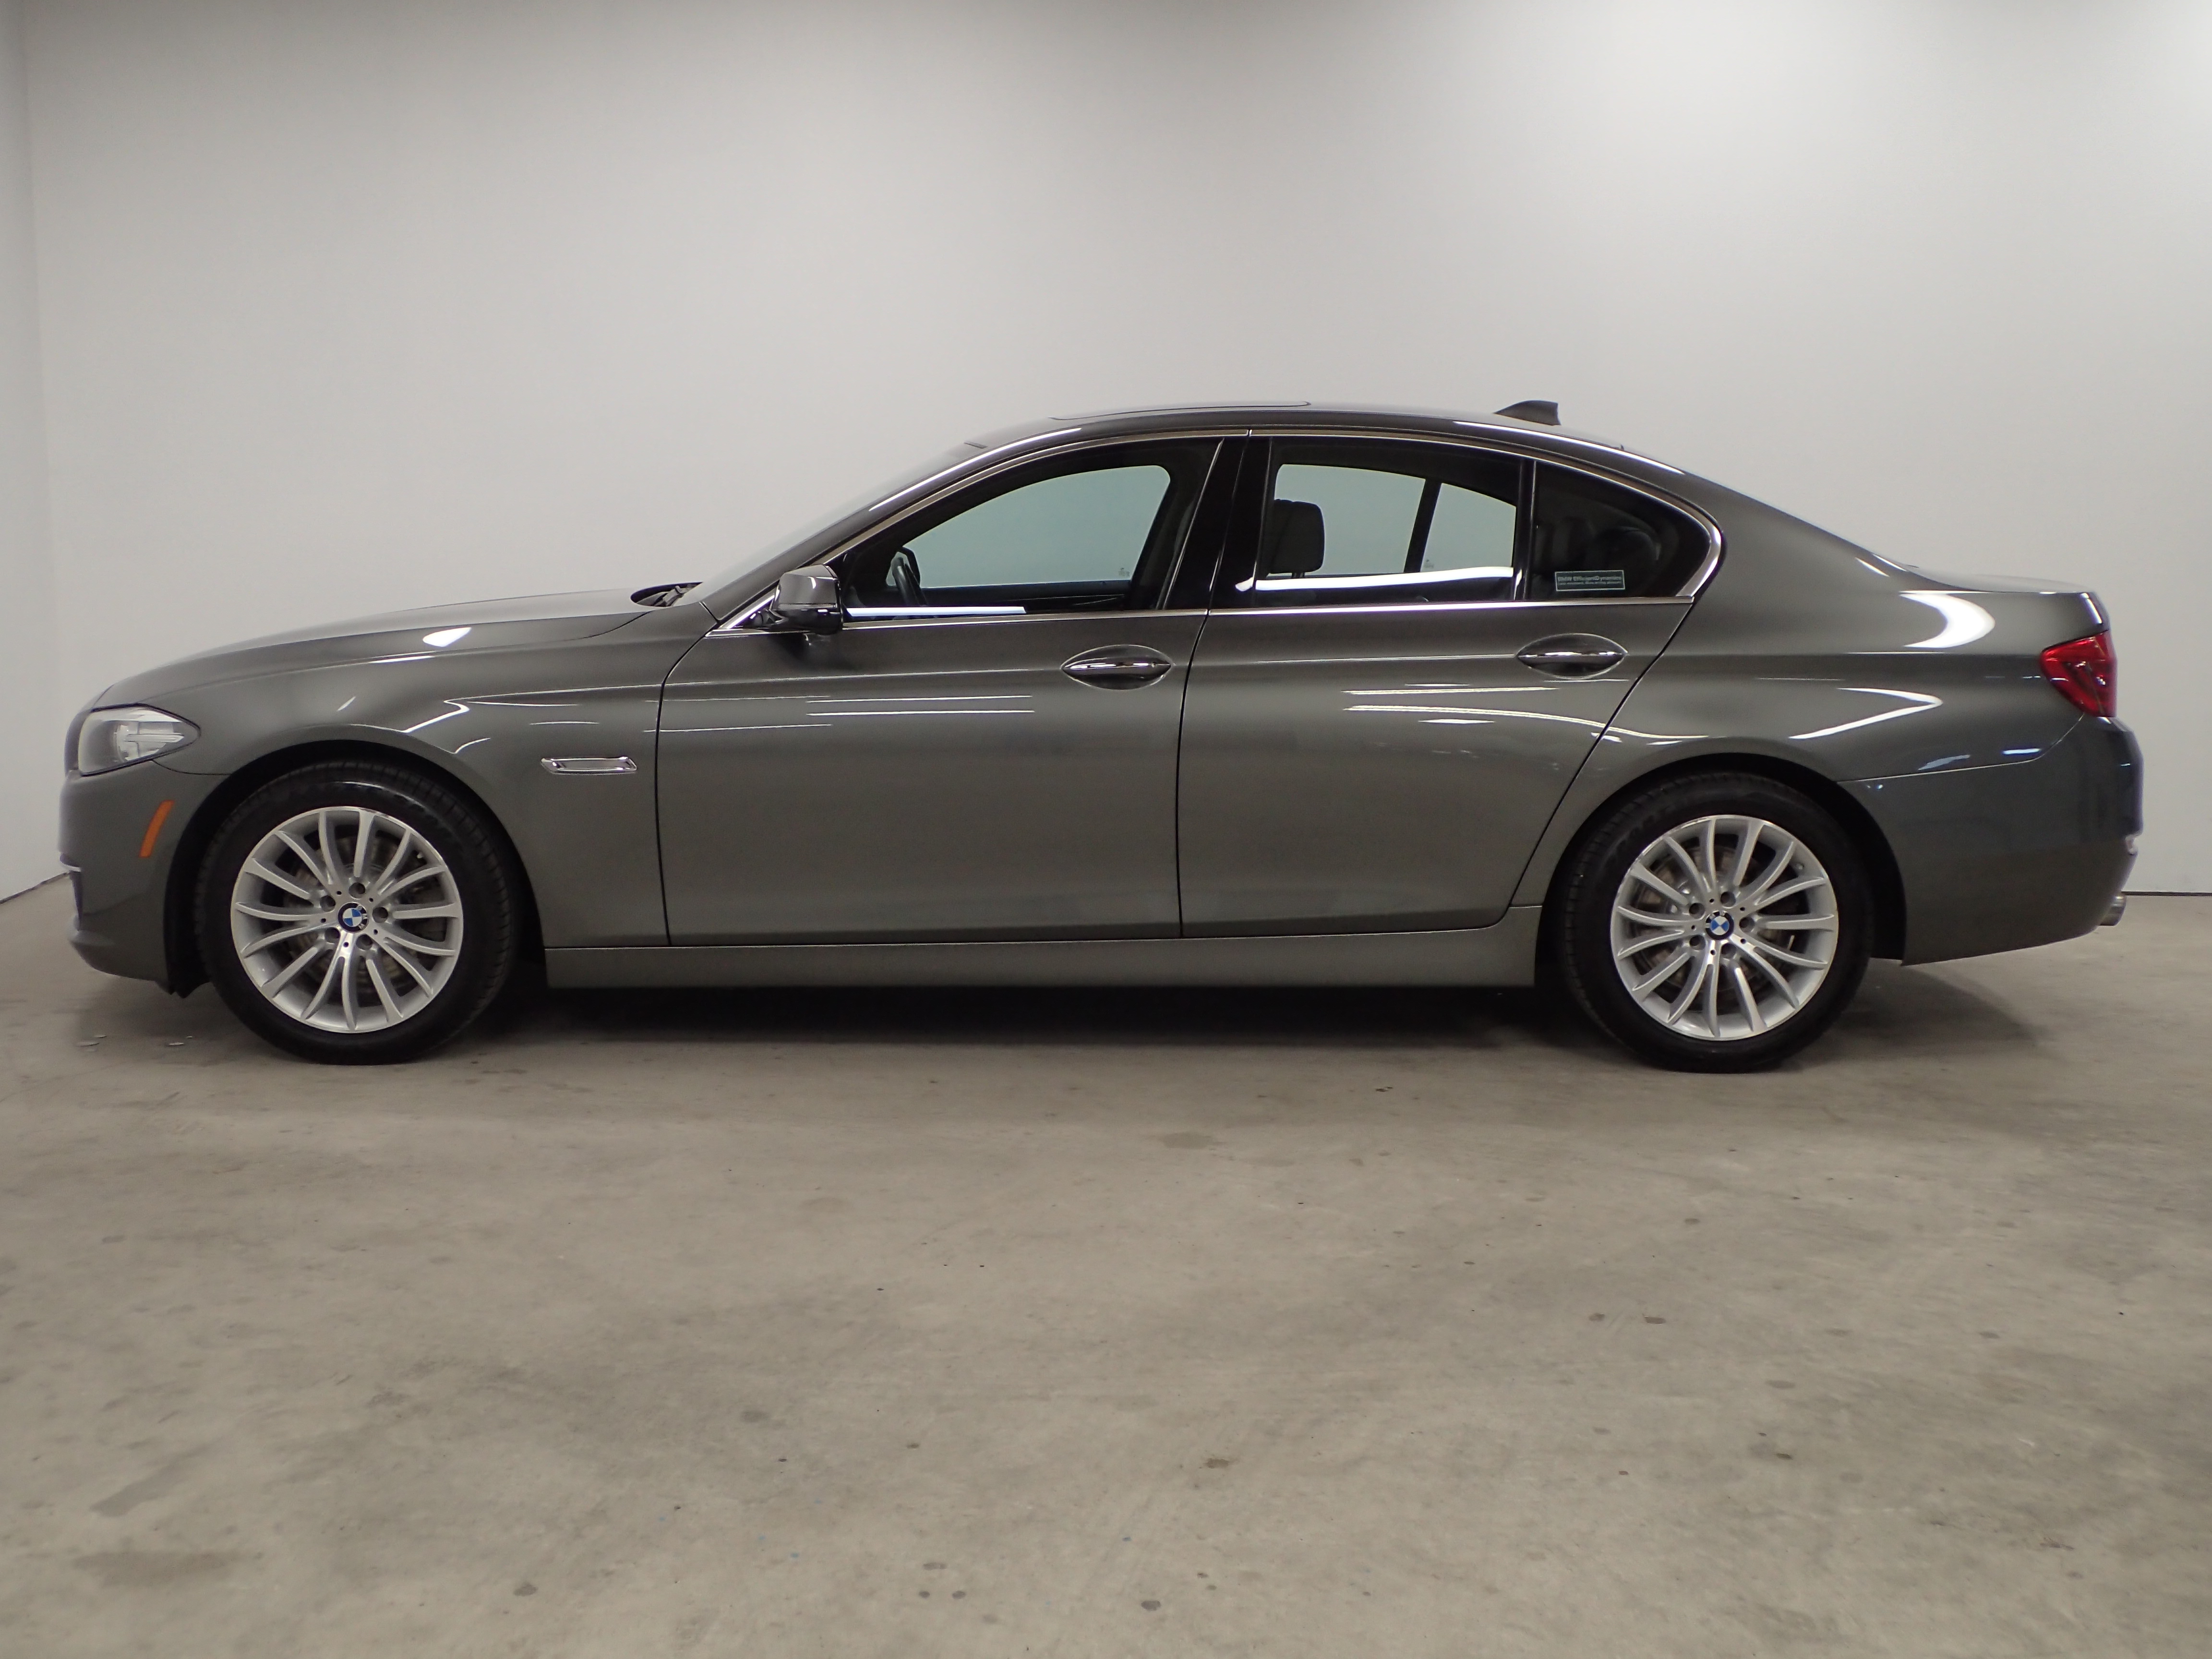 Pre-Owned 2014 BMW 528i xDrive Luxury Line 4dr Car in Manheim #219116 ...